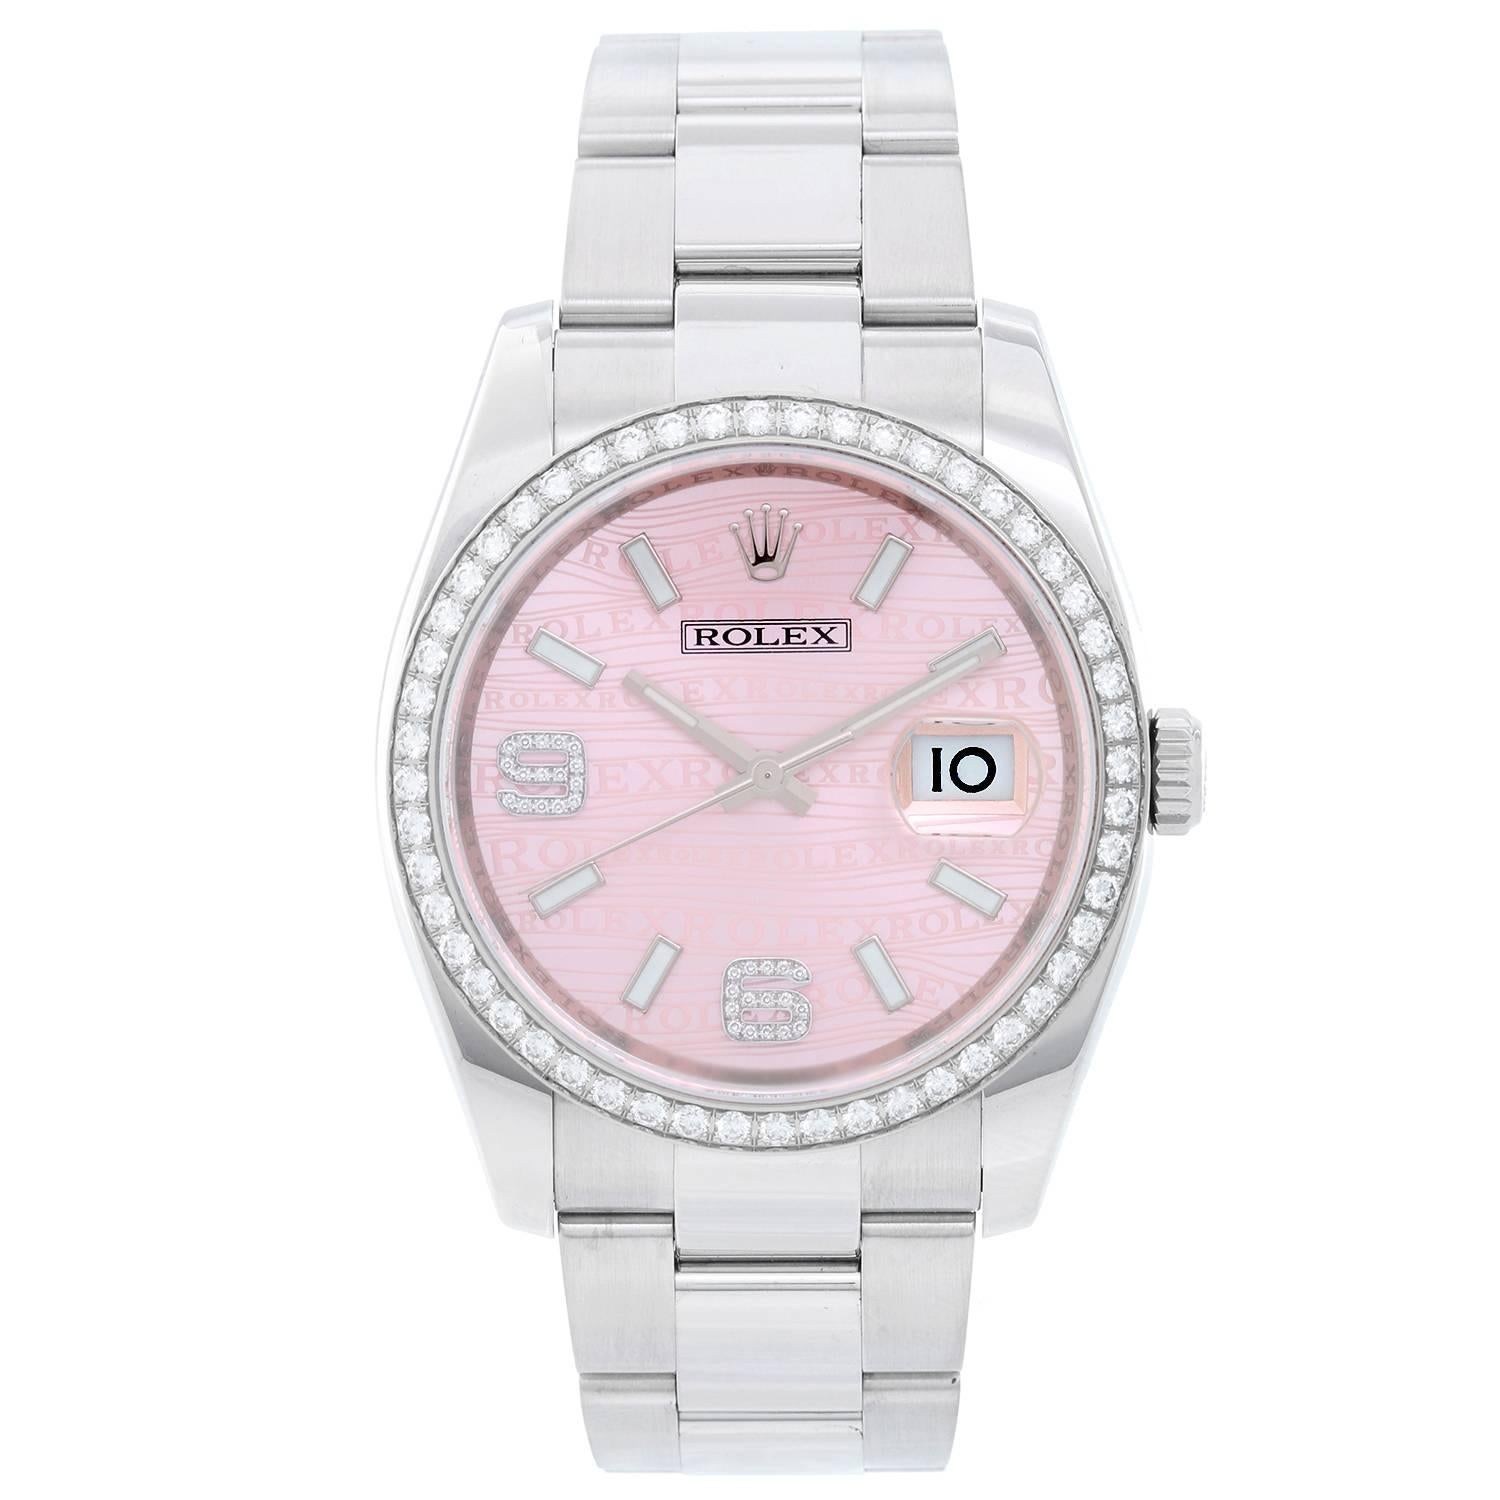 Rolex Stainless Steel Diamond Datejust Automatic Wristwatch Ref 116244